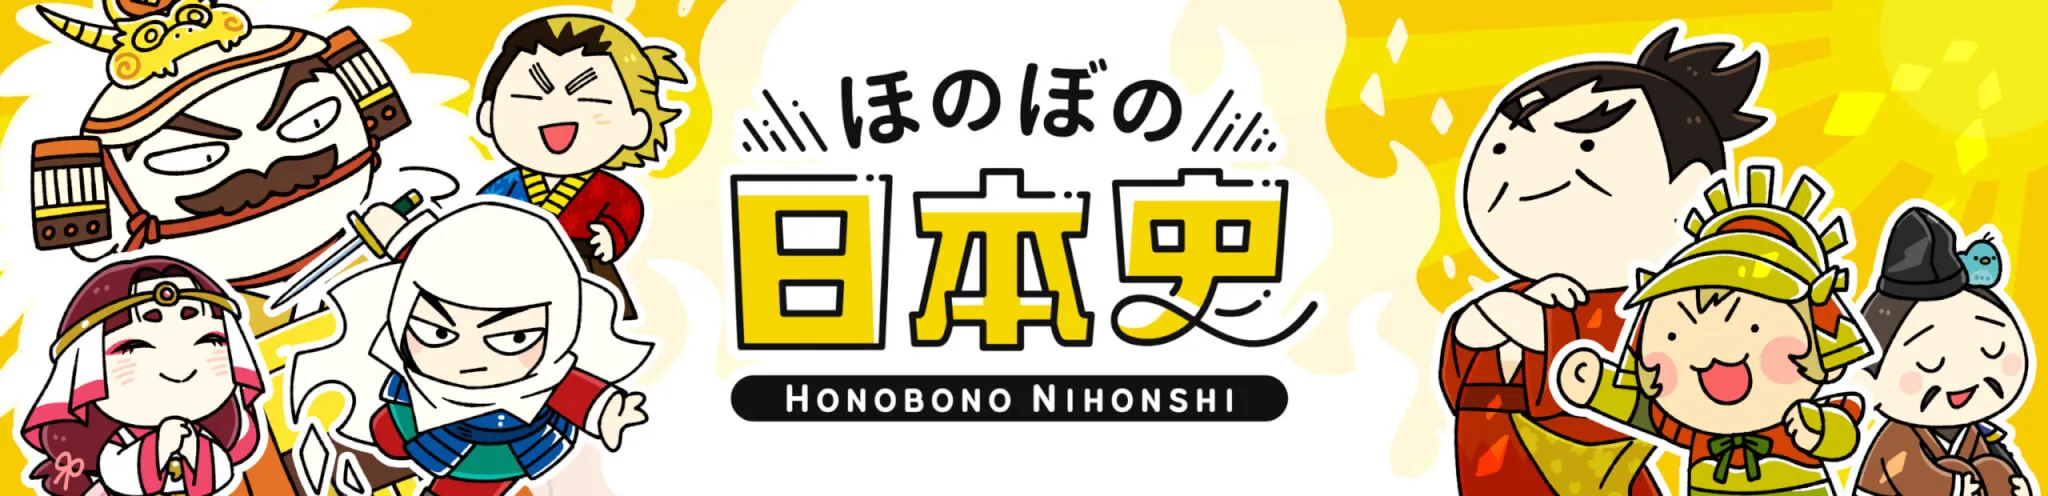 hono-header ほのぼの日本史 ヘッダー